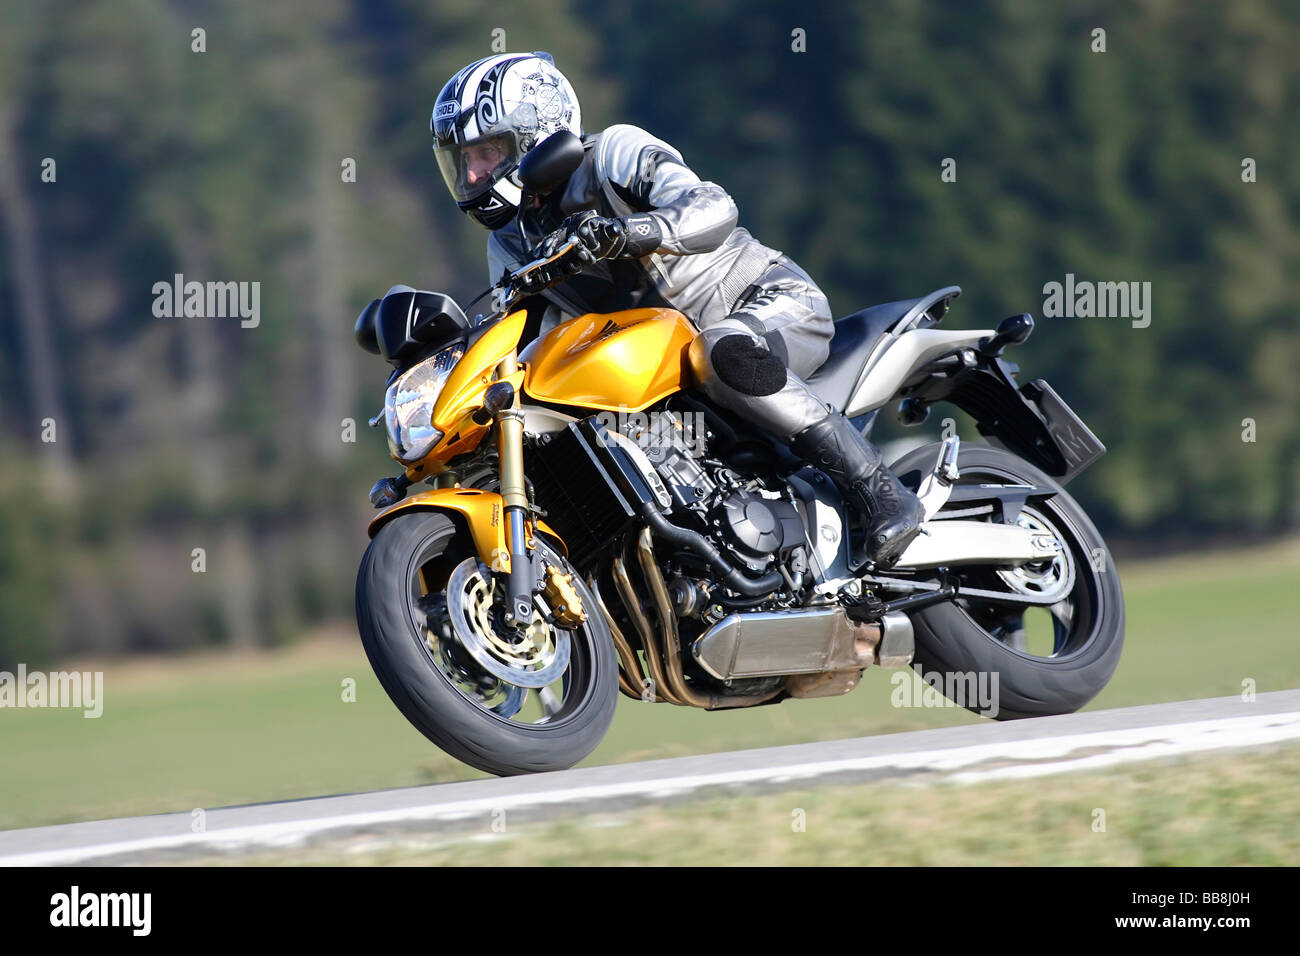 Honda Hornet motorcycle, riding shot Stock Photo